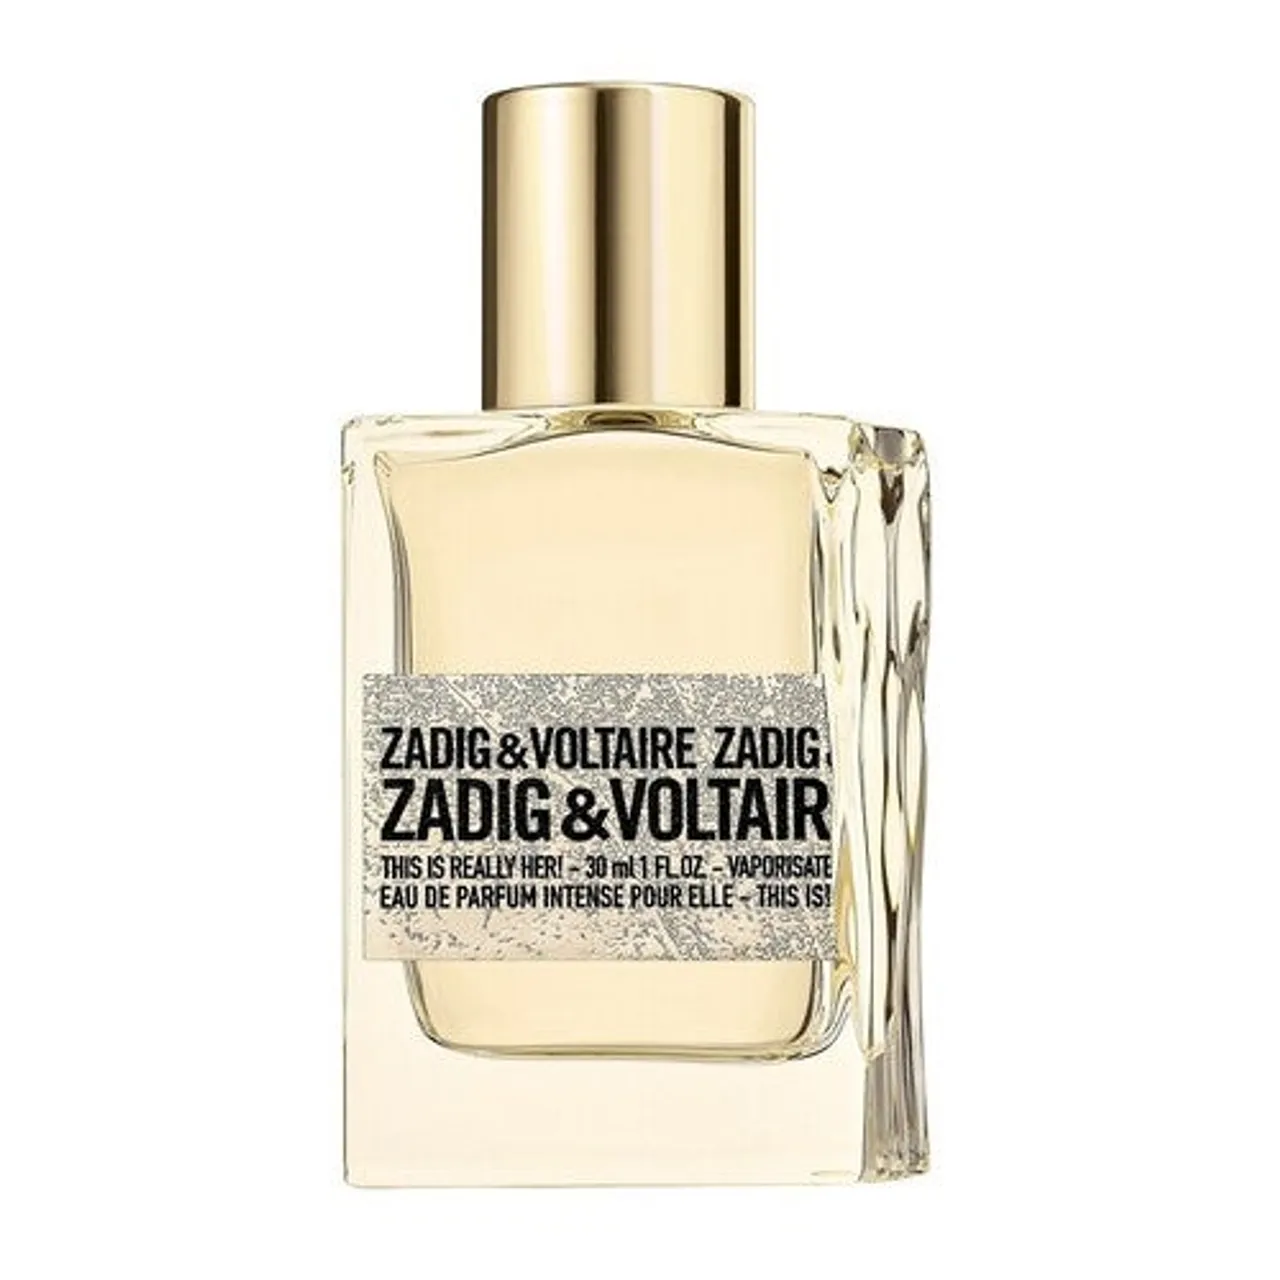 Zadig&Voltaire This Is Really Her! Eau de Parfum 30 ml